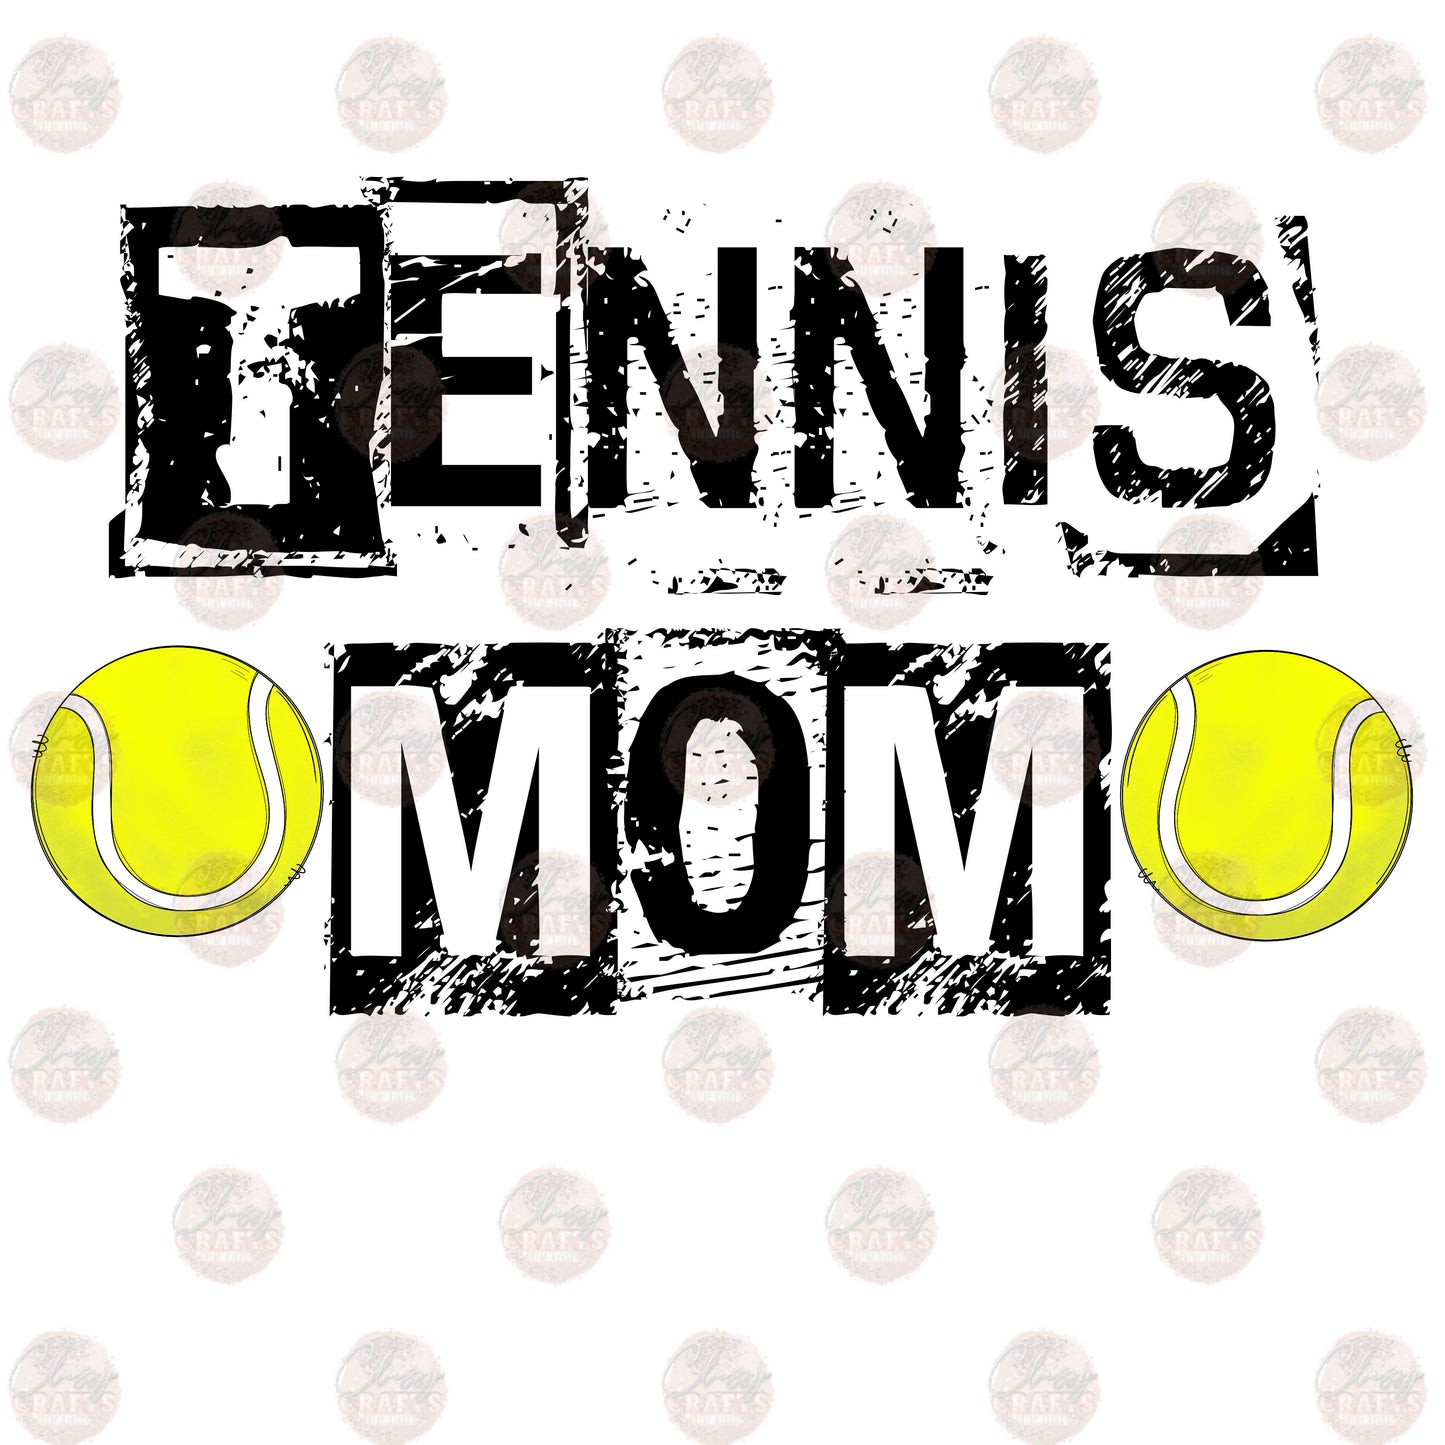 Tennis Mom 2 Transfer